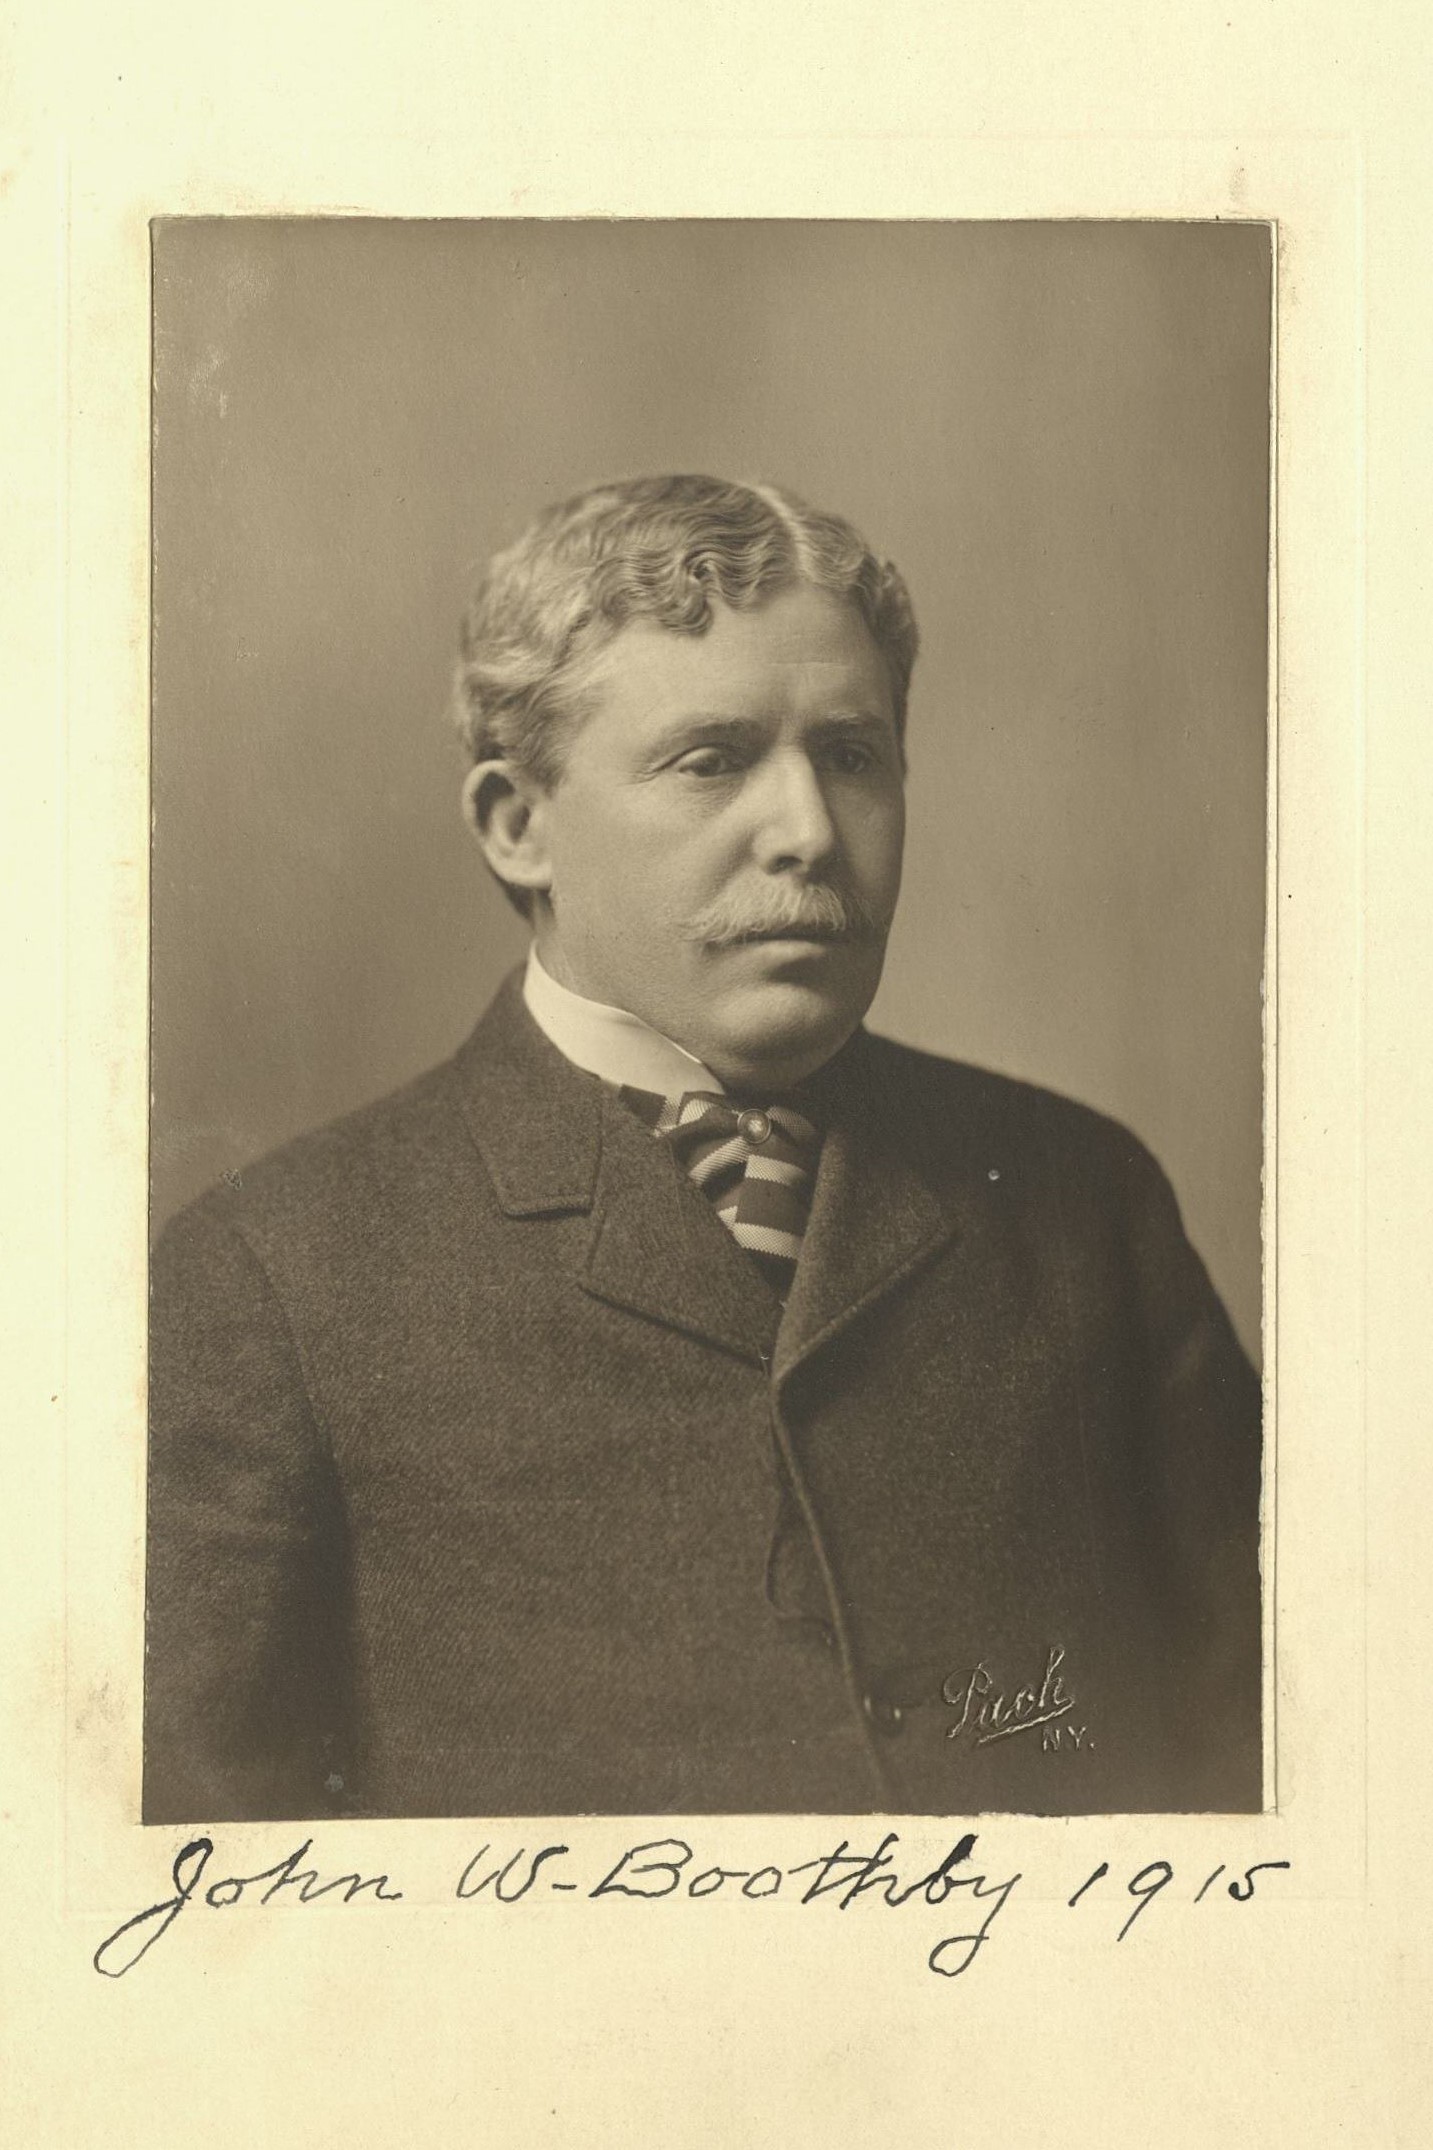 Member portrait of John W. Boothby